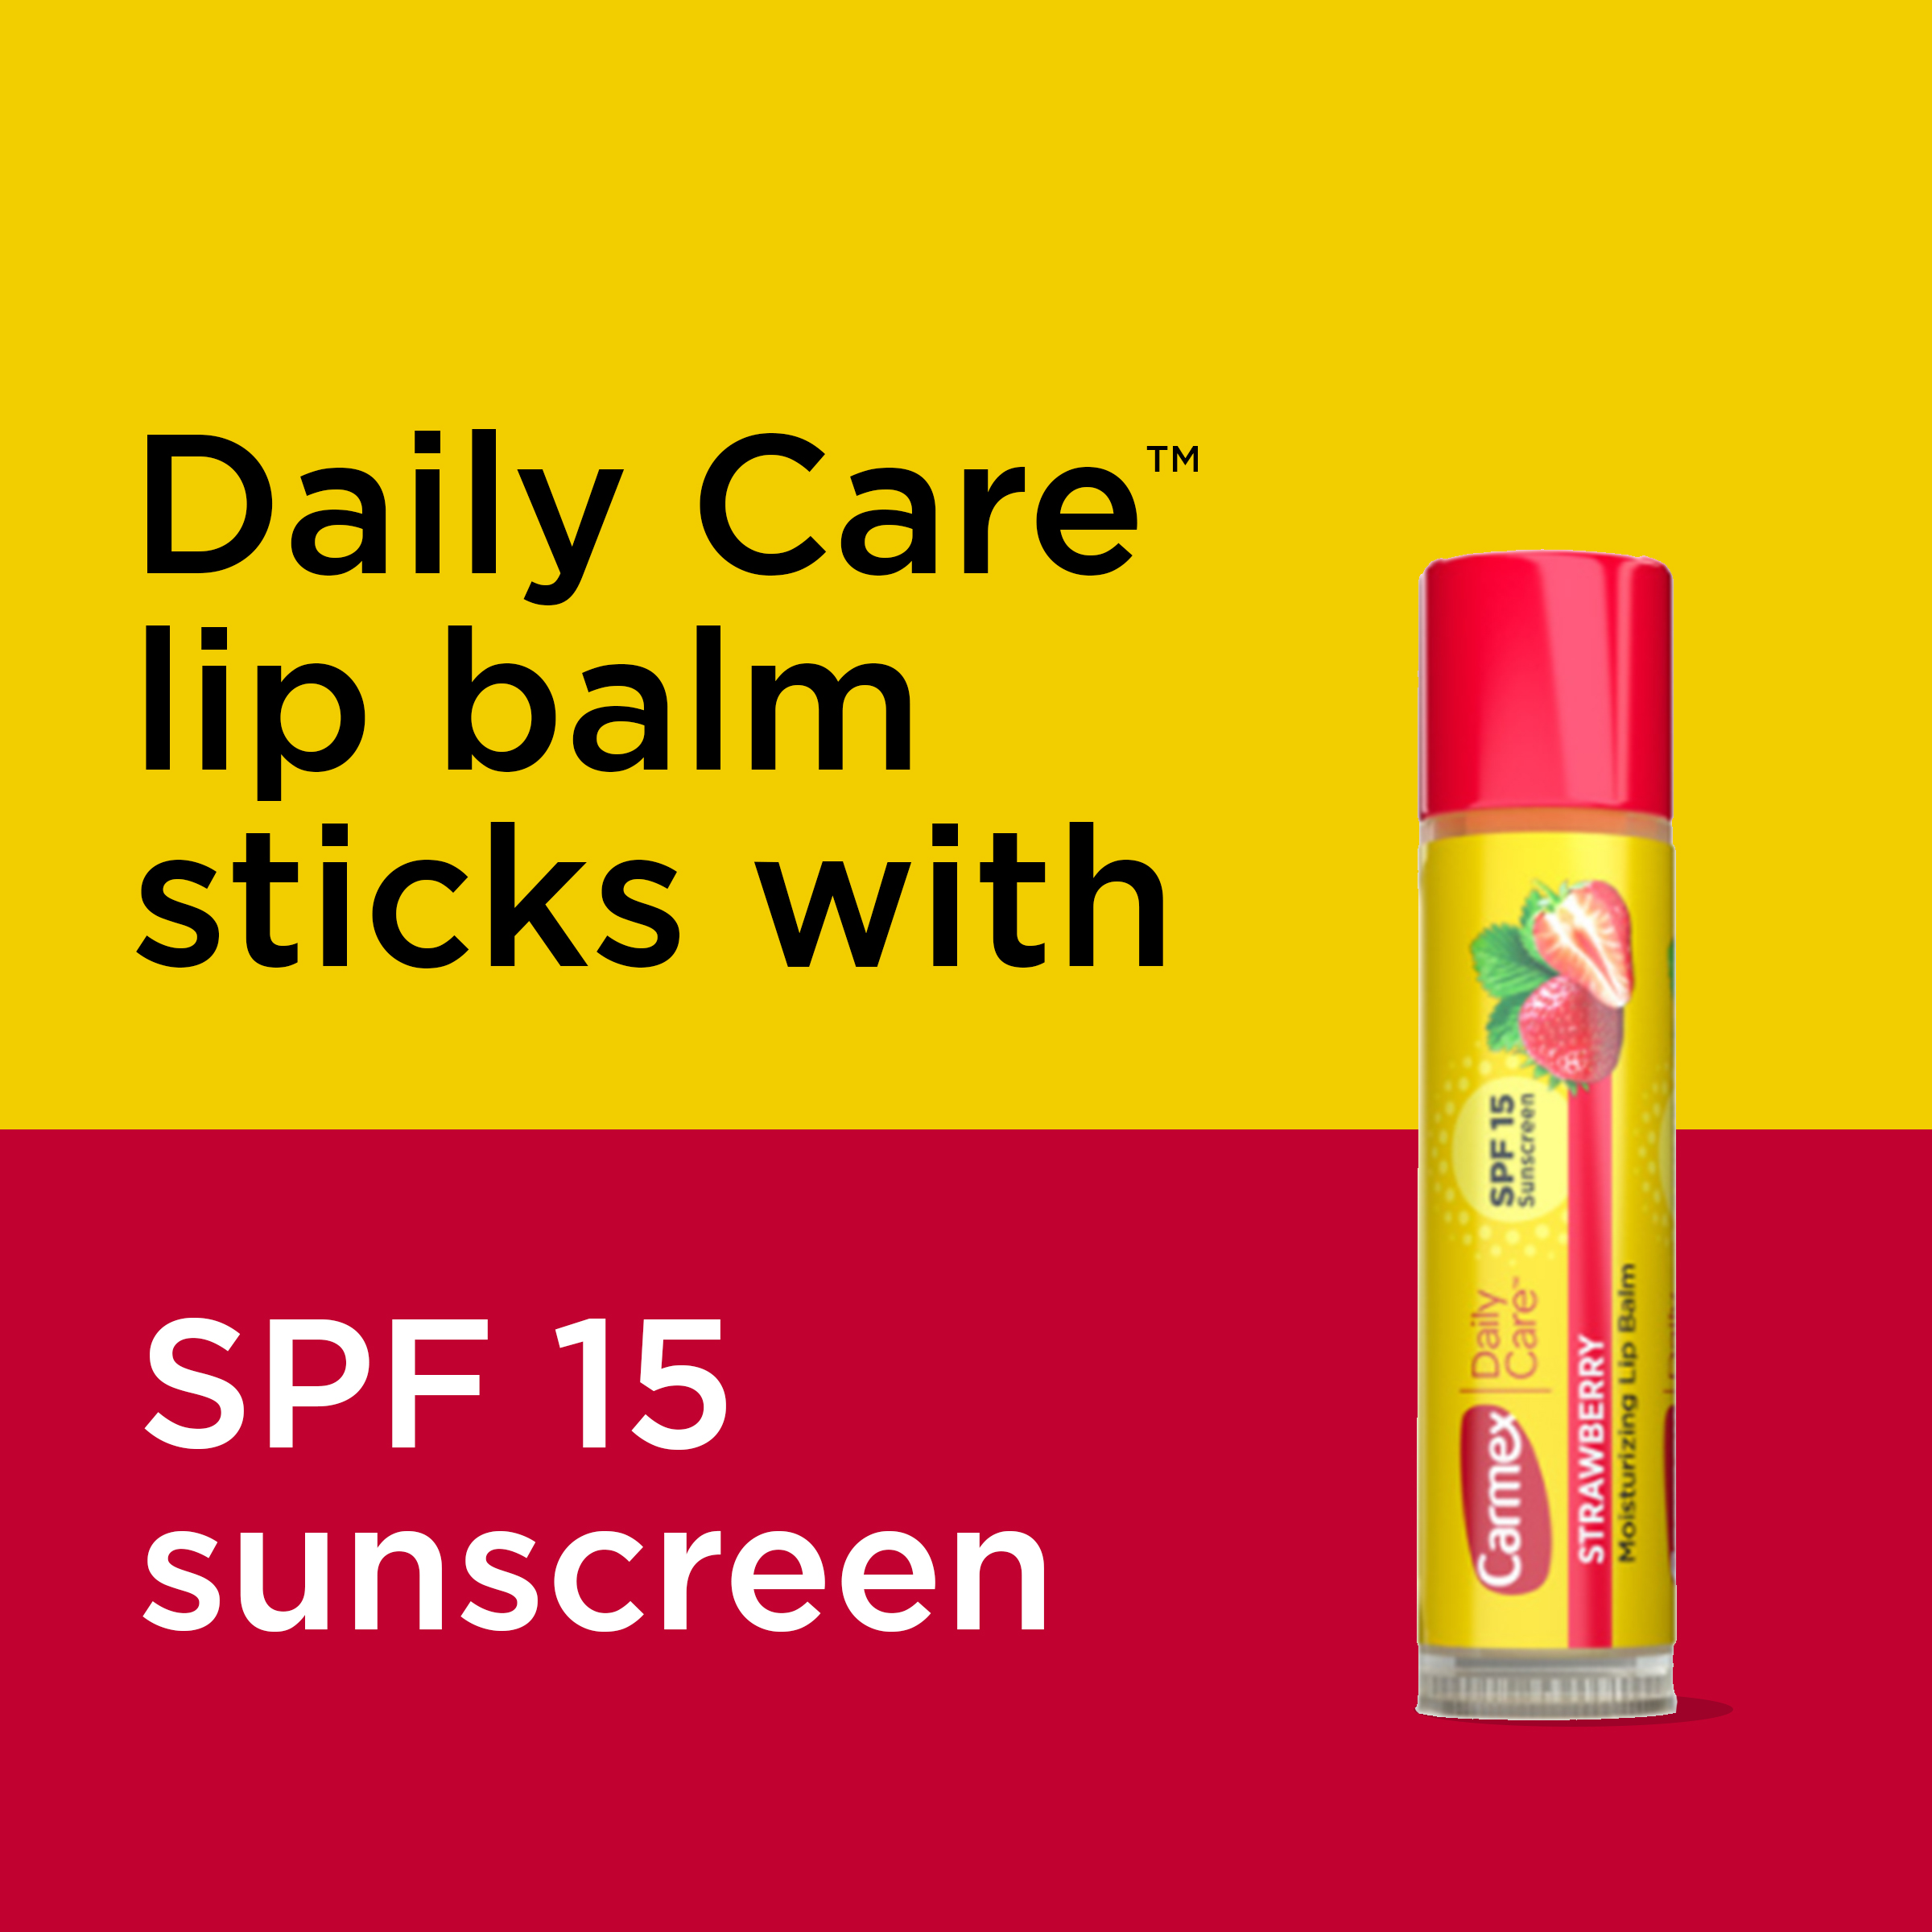 Carmex Daily Care Moisturizing Lip Balm Sticks, SPF 15, Multi-Flavor Lip Balm, 3 Count (1 Pack of 3) - image 5 of 12